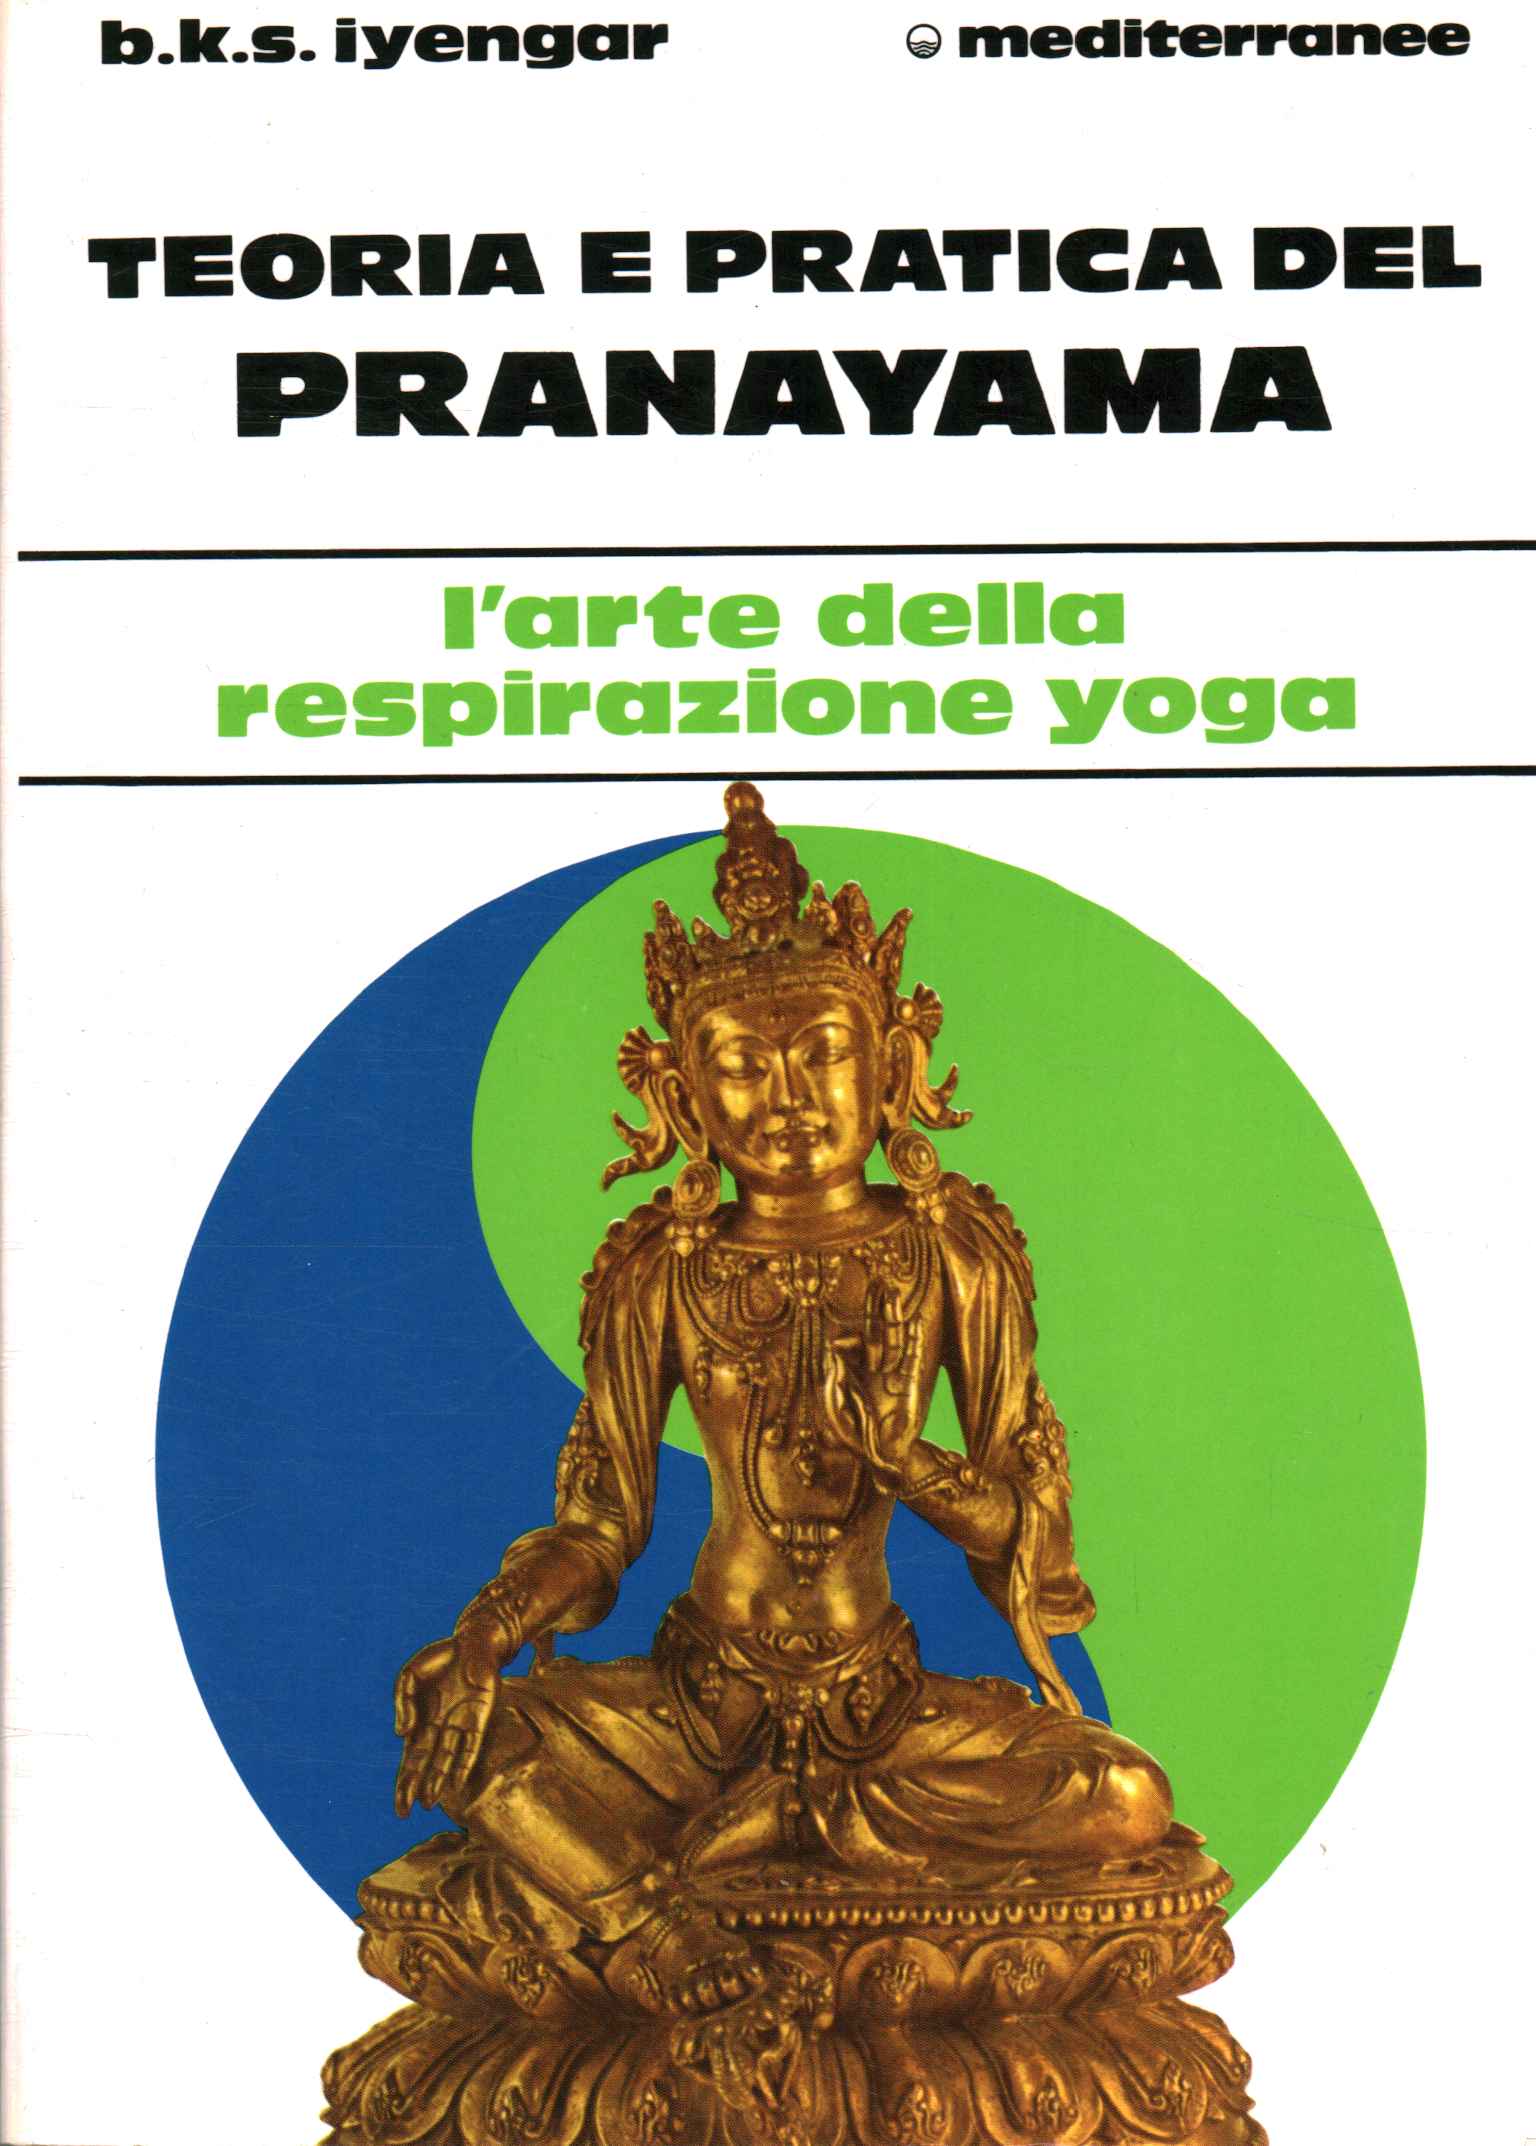 Theory and practice of Pranayama